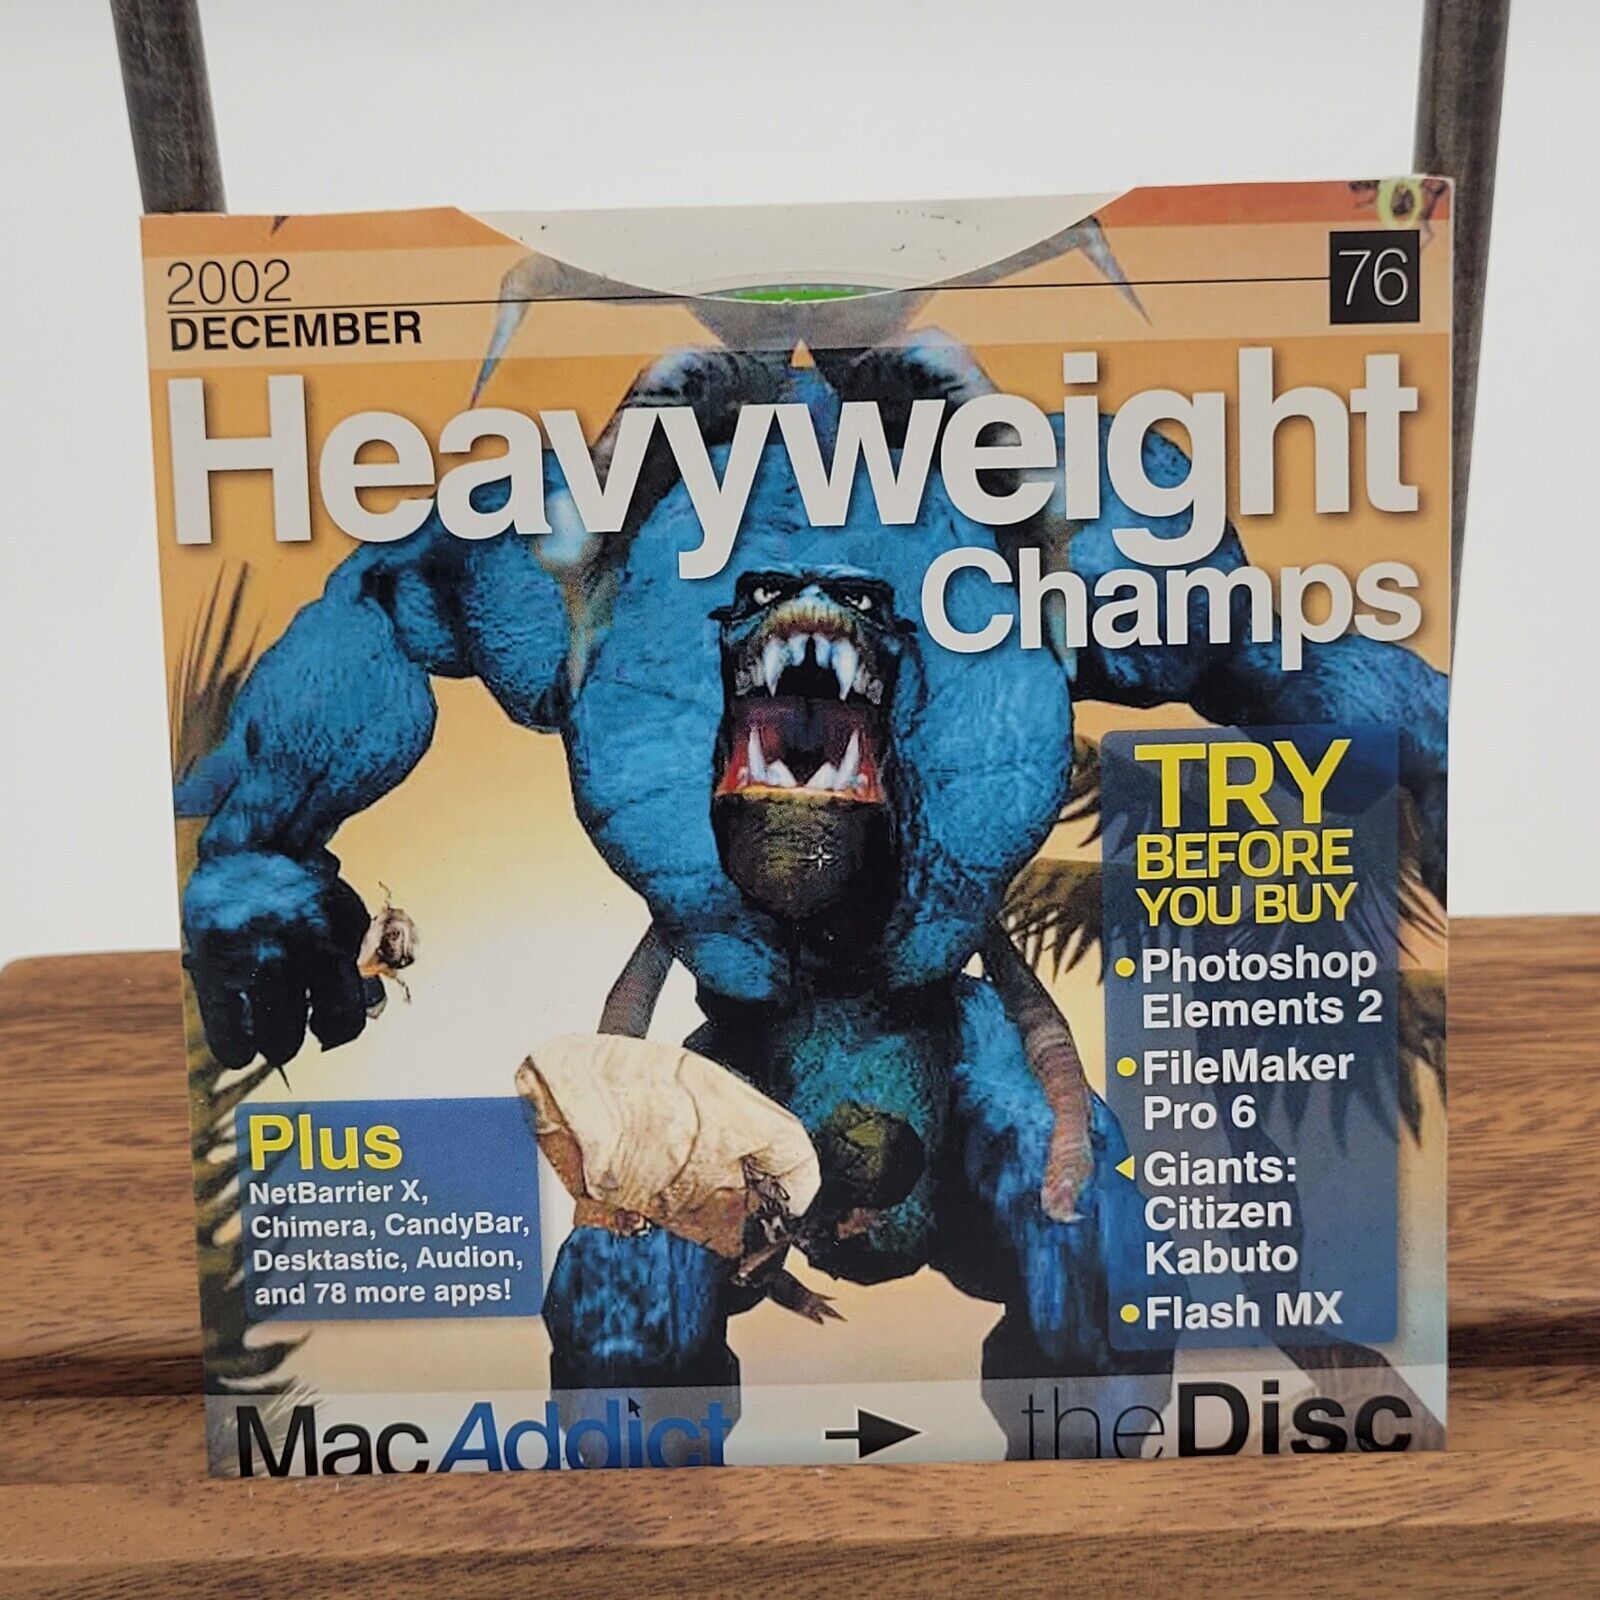 Mac Addict Heavyweight Champs December #76 Macintosh Sampler The Disc 2002 Dec